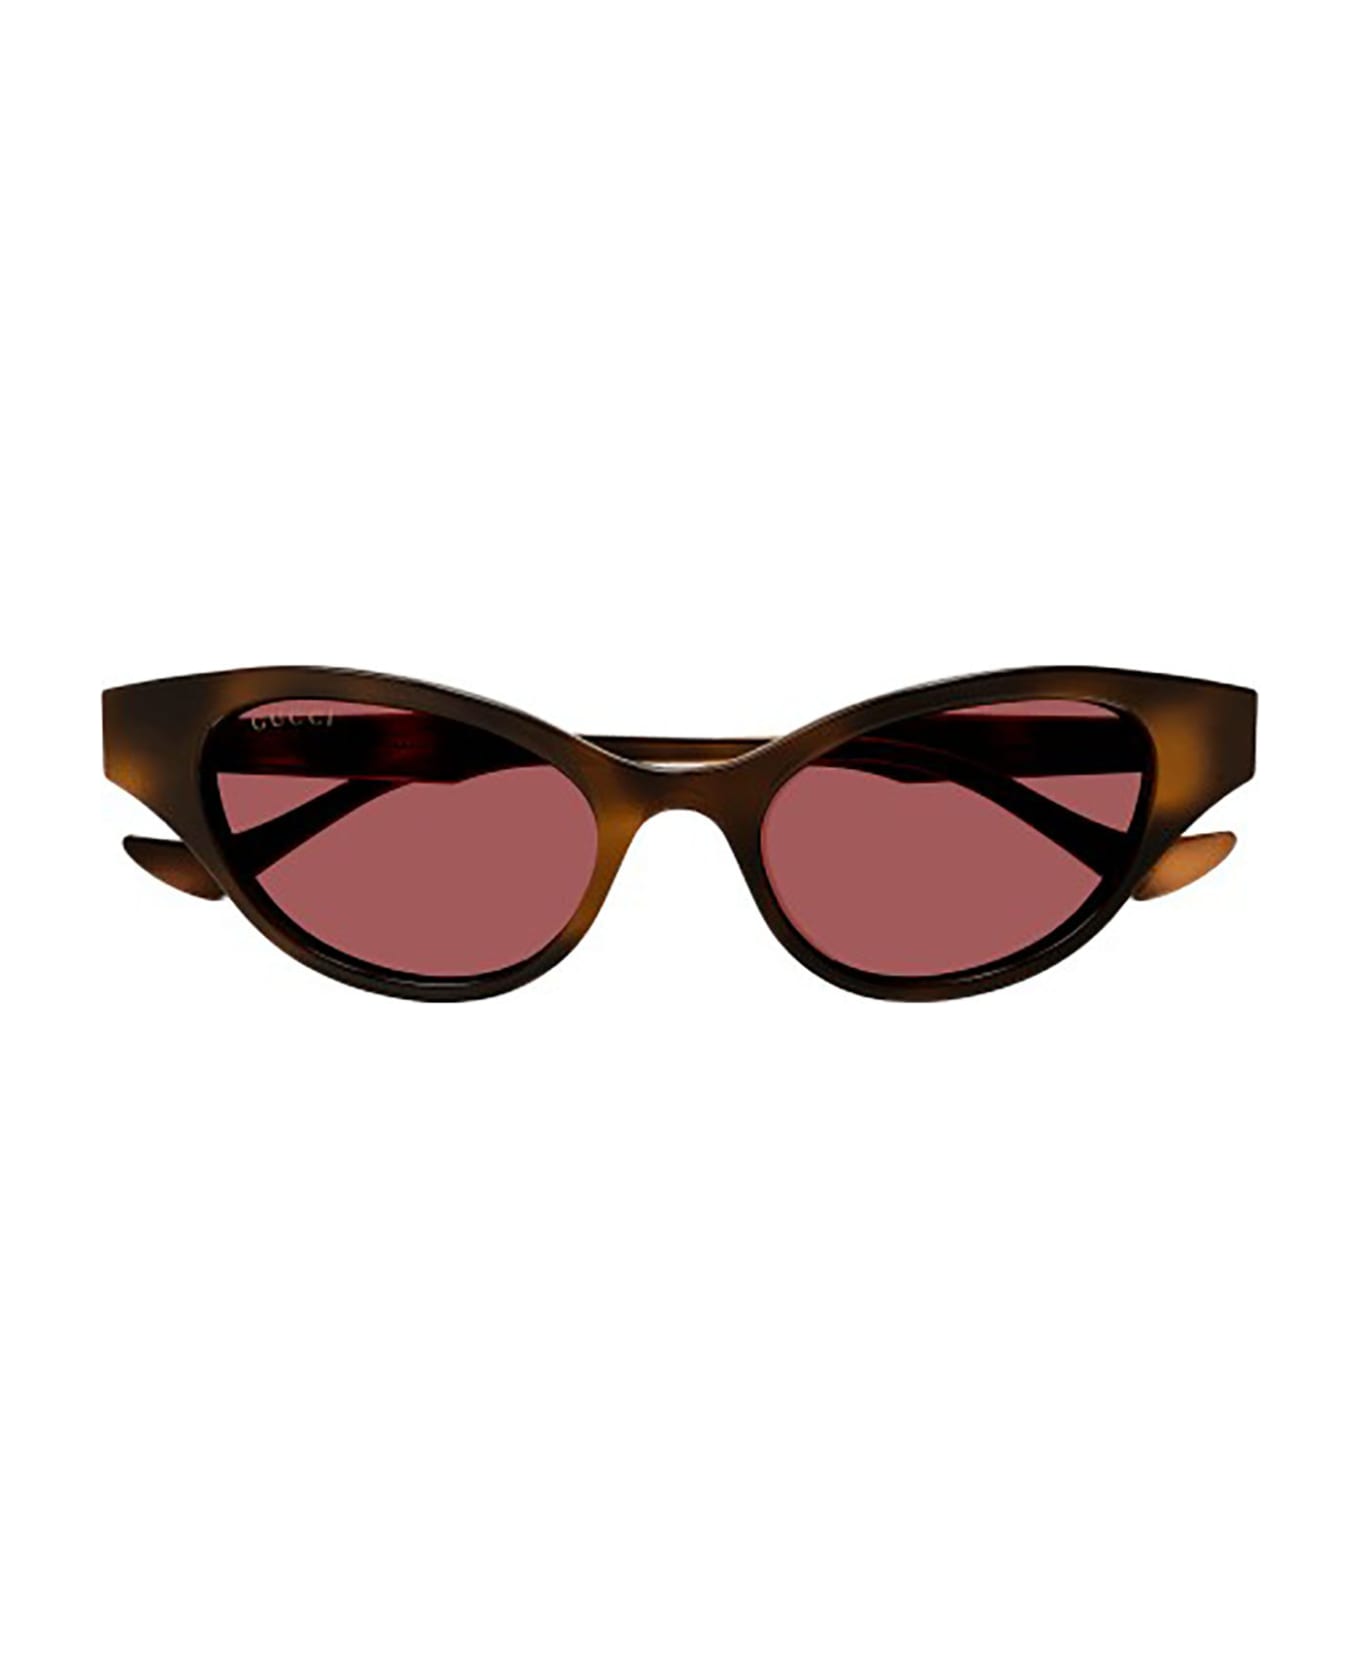 Gucci Eyewear GG1298S Sunglasses - Havana Havana Brown